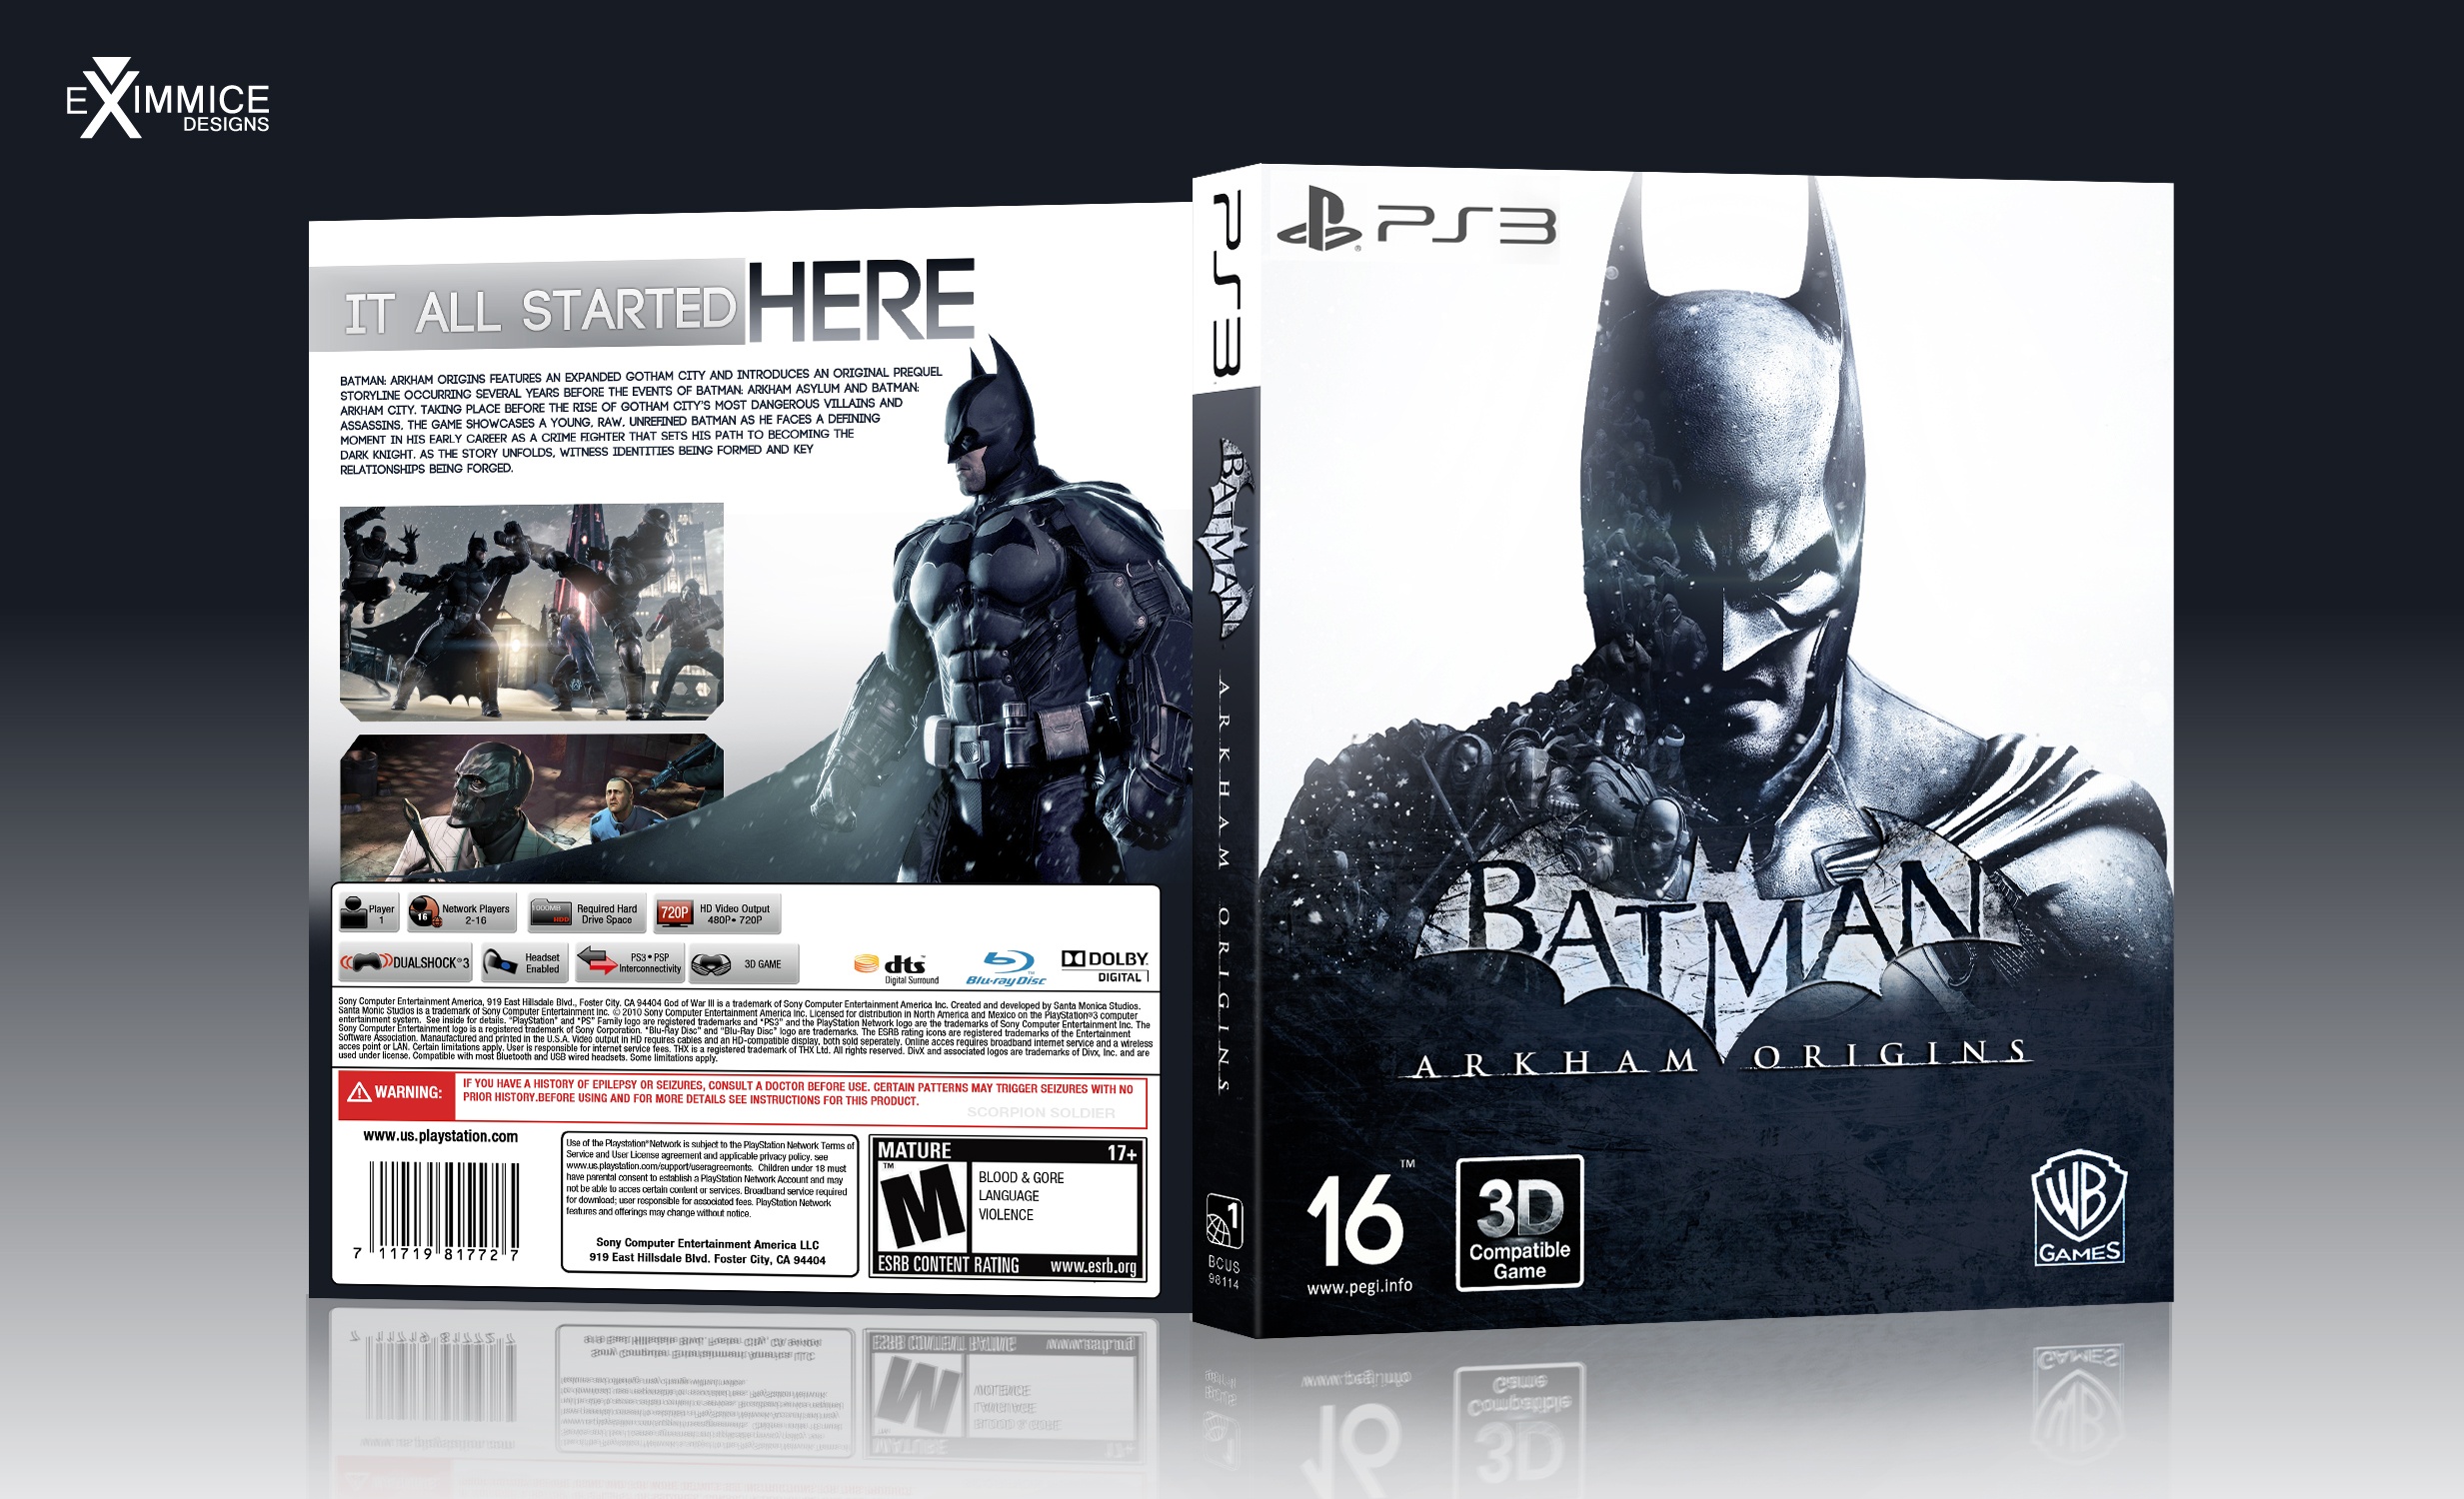 Batman: Arkham Origins PlayStation 3 Box Art Cover by eximmice